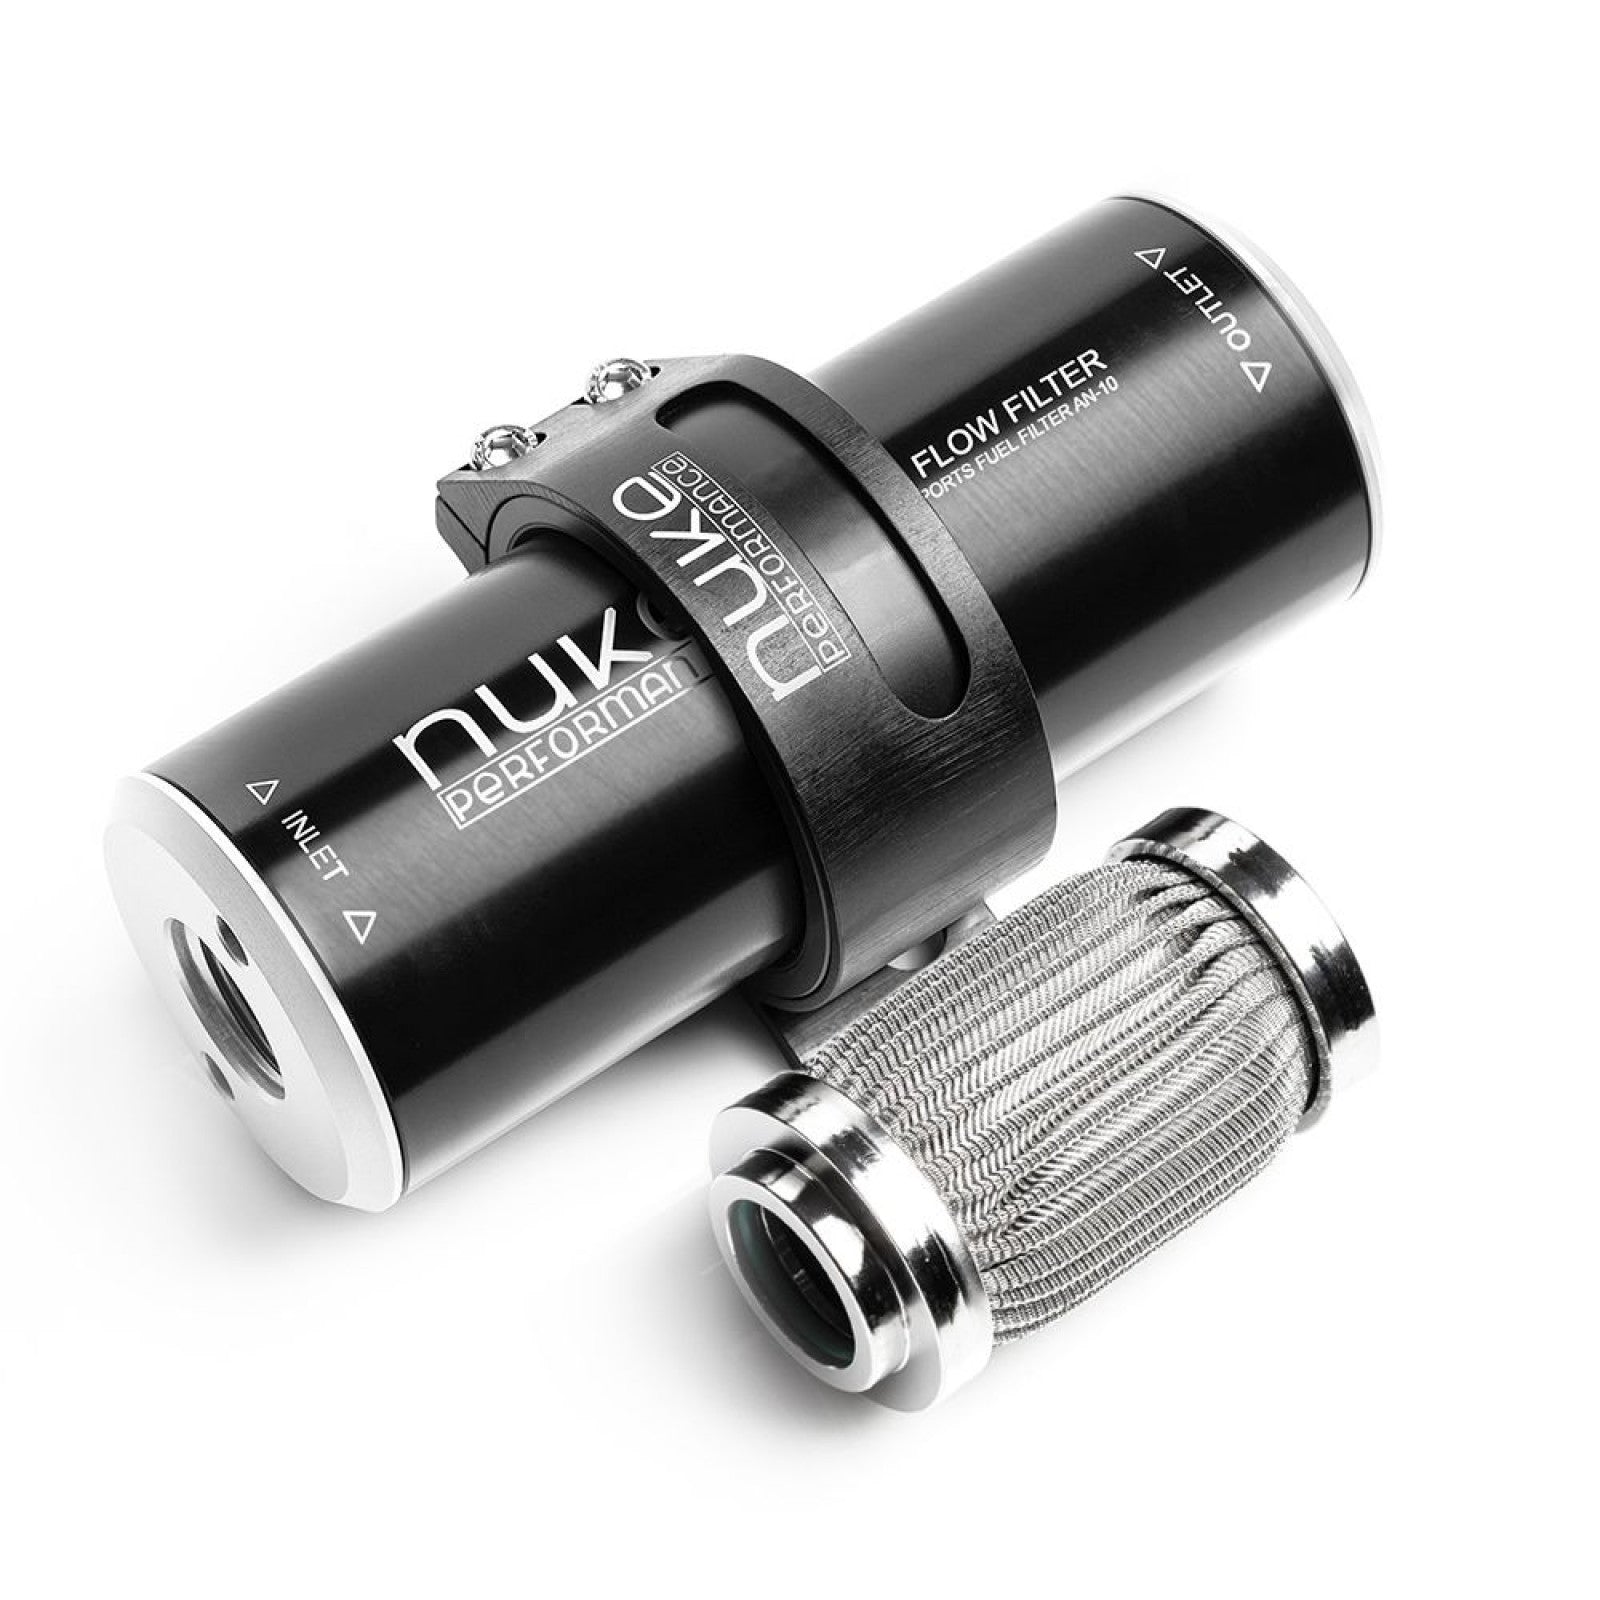 Nuke Performance Fuel Filter Slim 10 micron AN-10 - Cellulose filter element